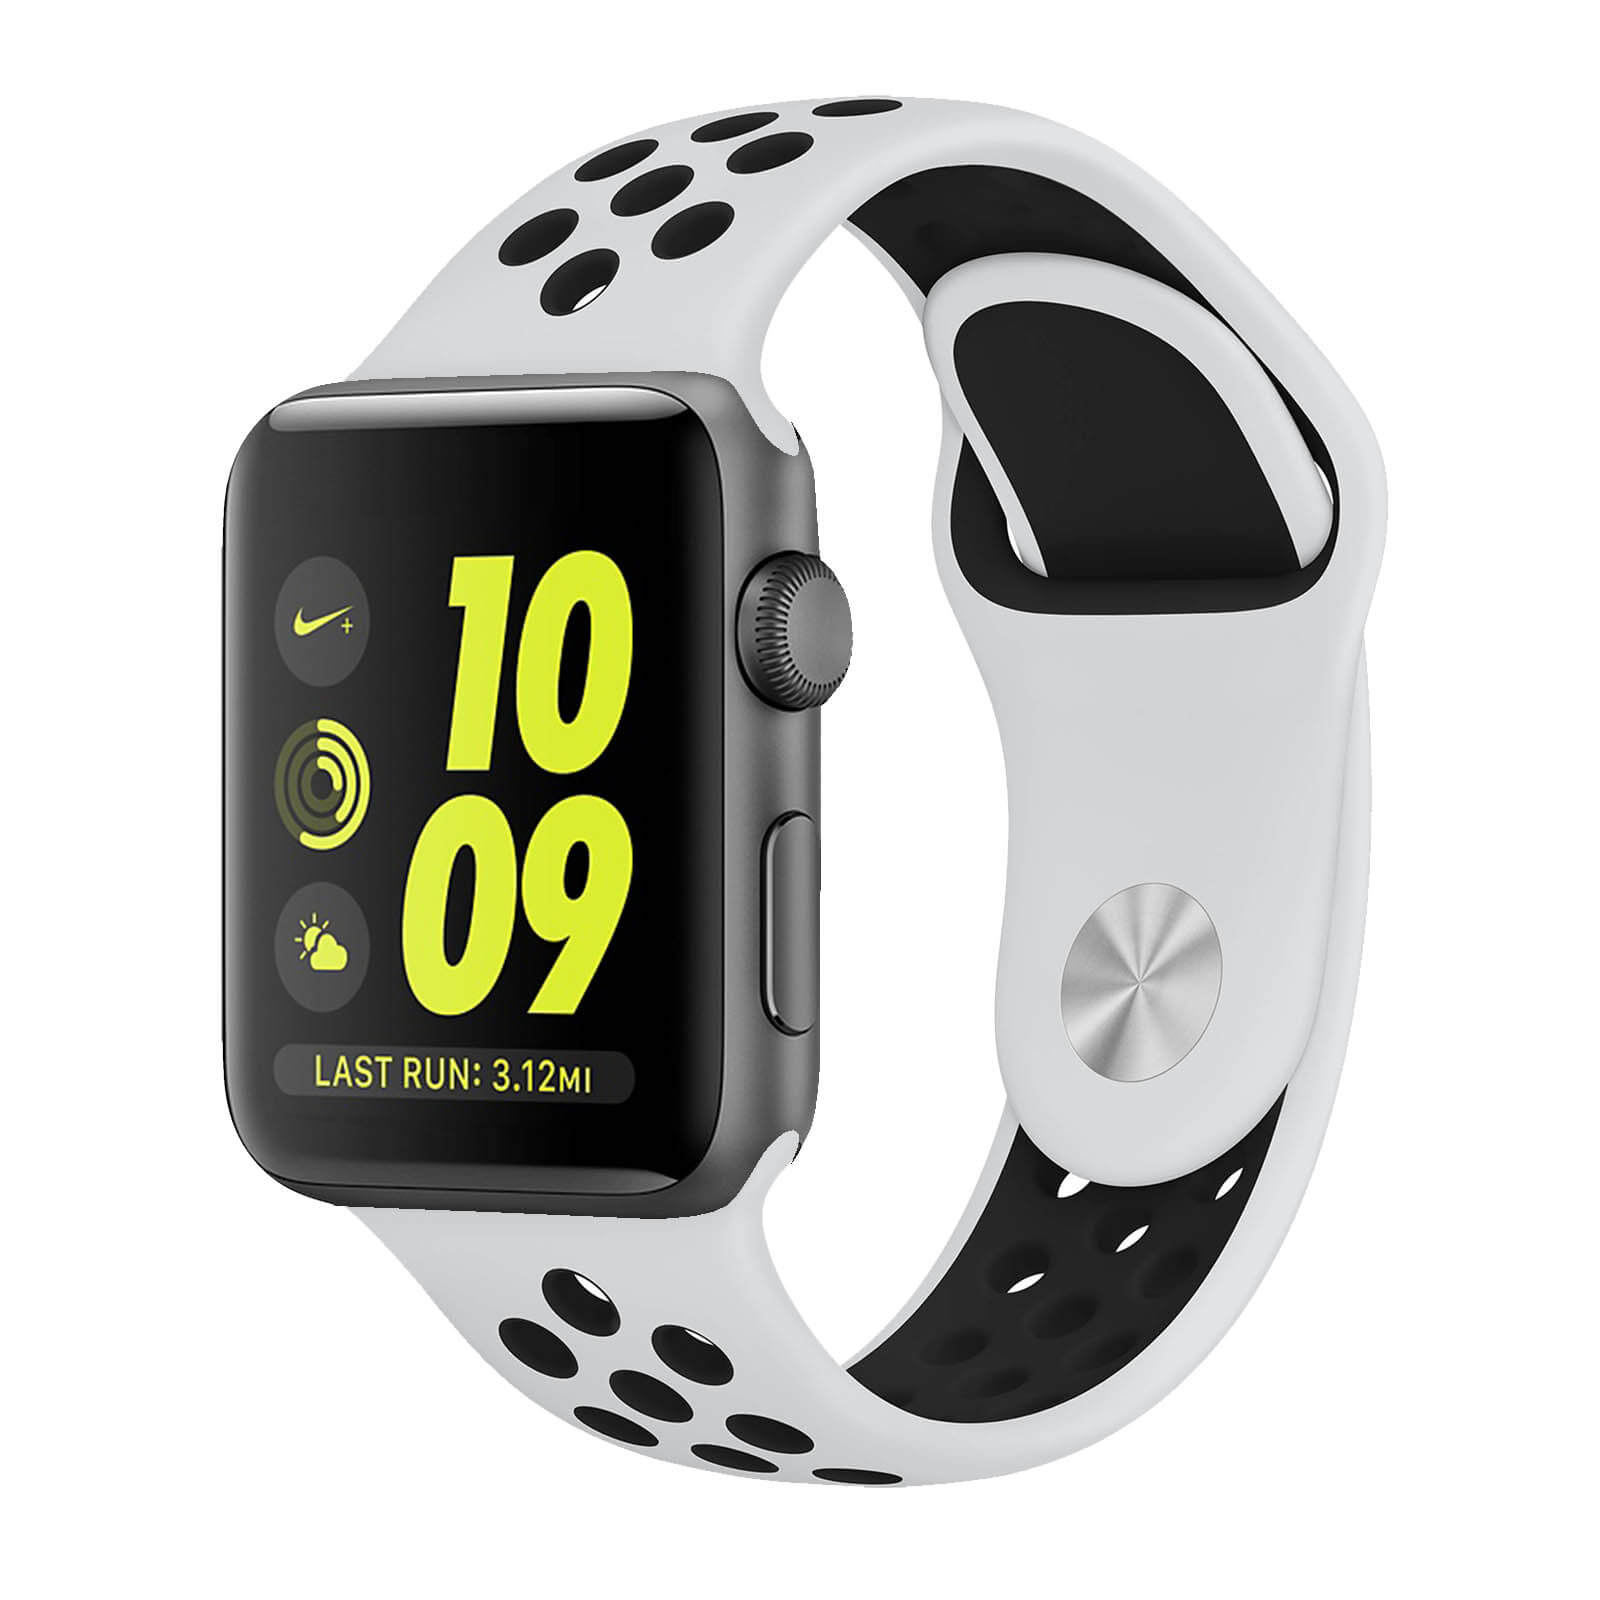 Apple Watch Series 2 Nike+ 38mm GPS + Cellular Grau